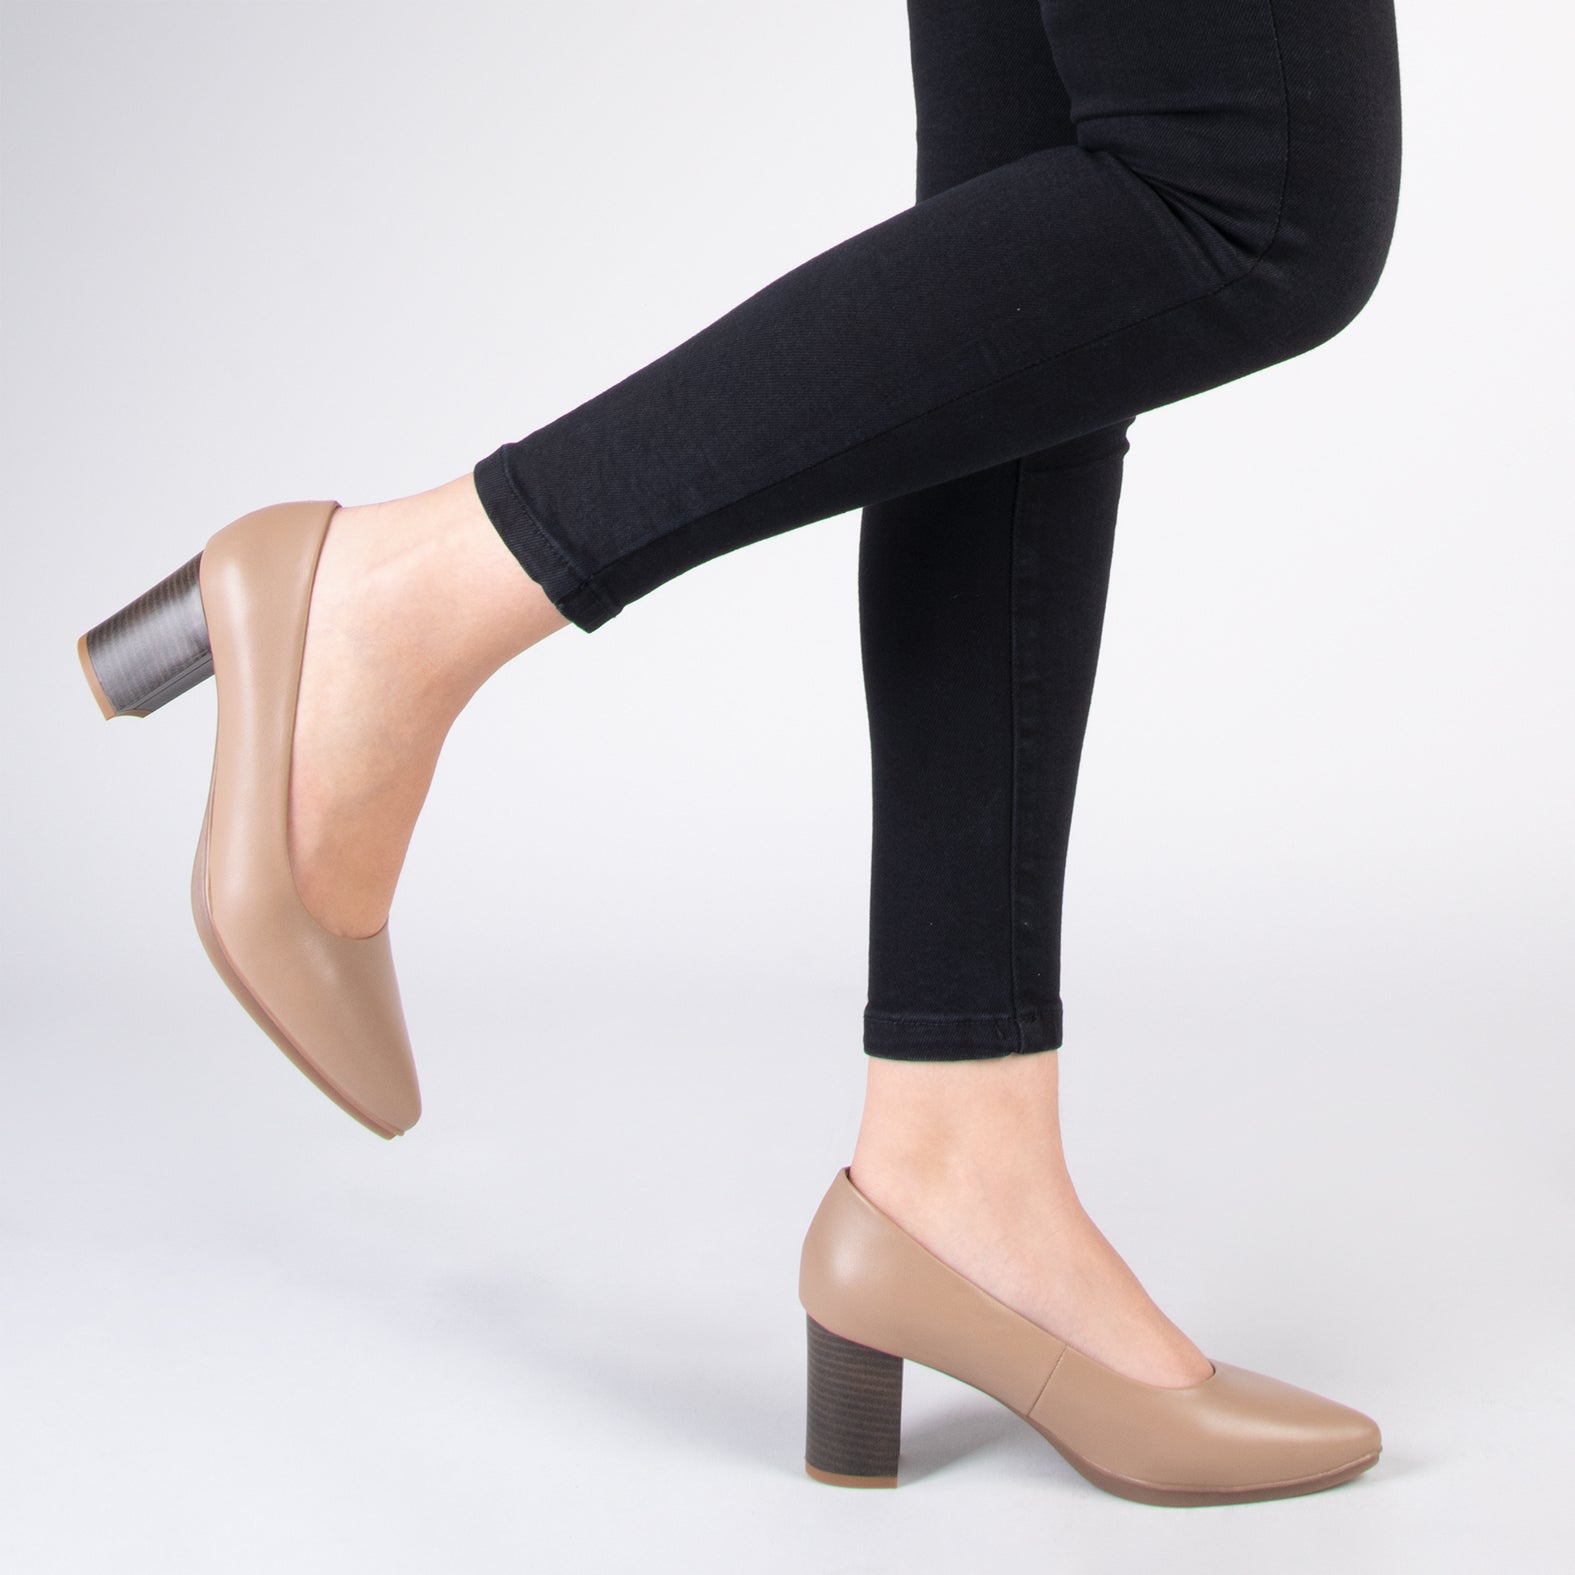 URBAN S SALON – TAUPE nappa leather mid heels